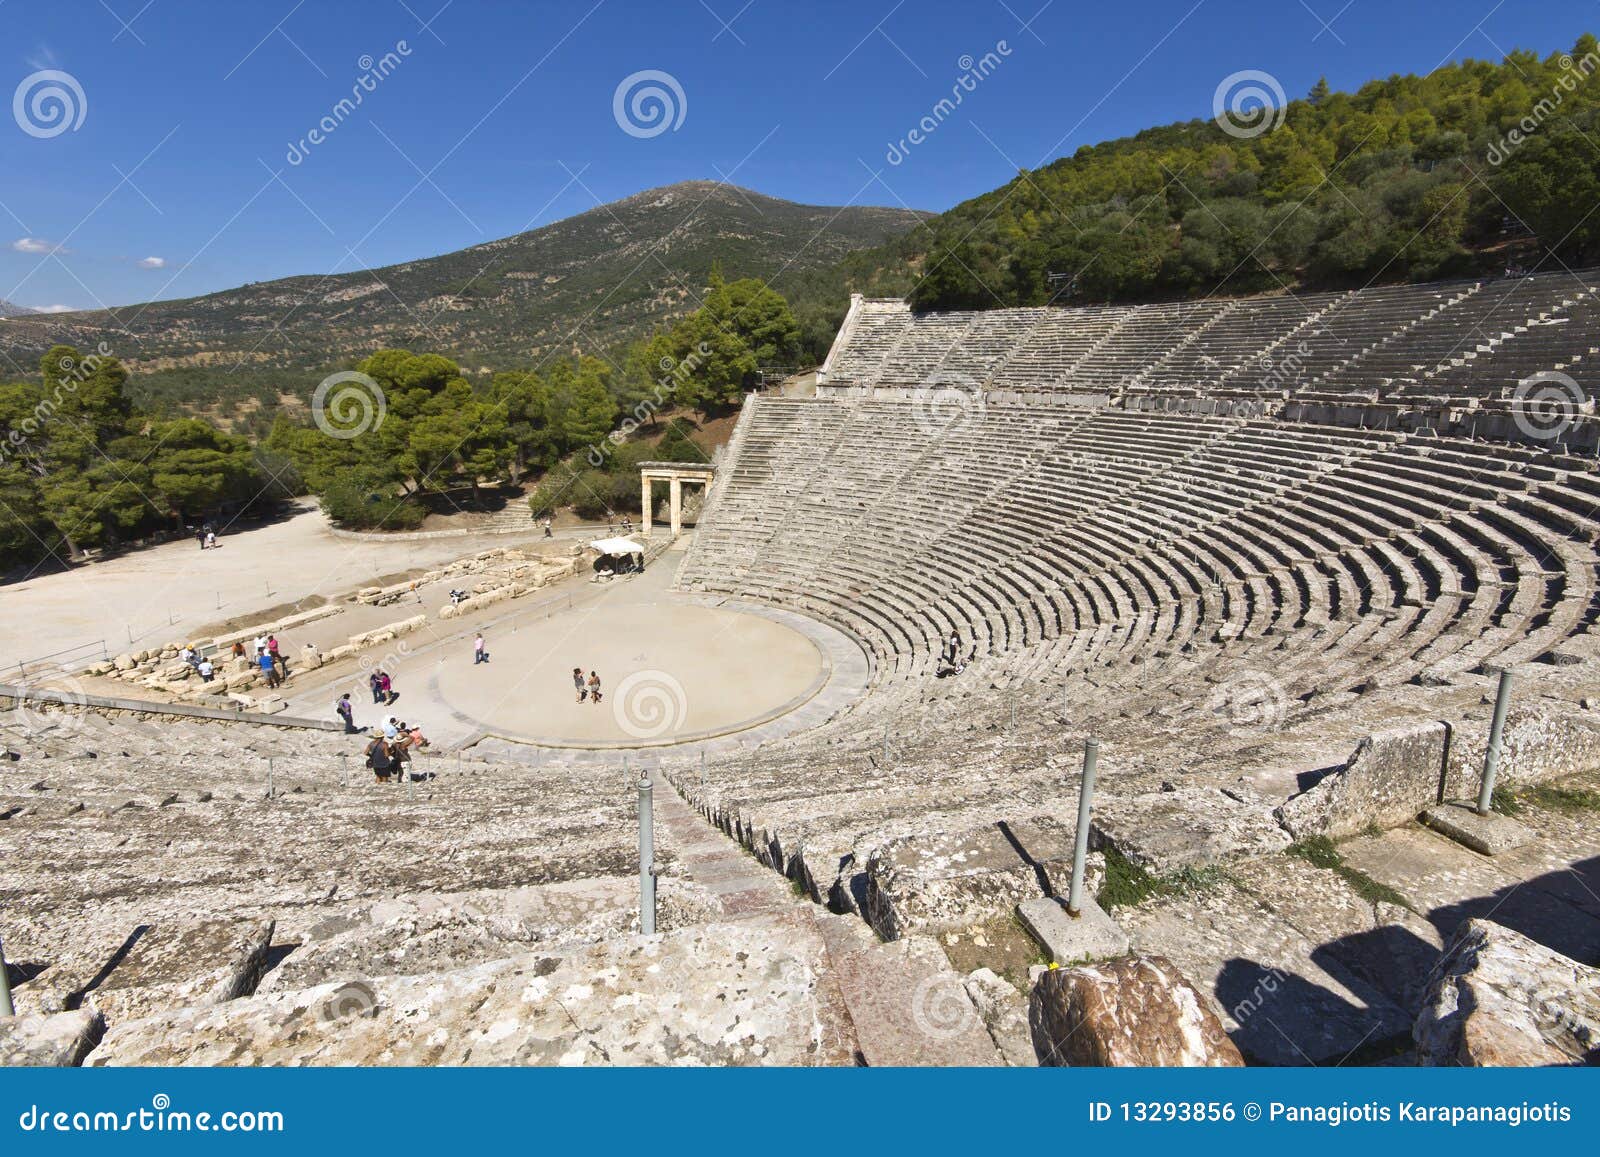 ancient amphitheater of epidaurus at greece